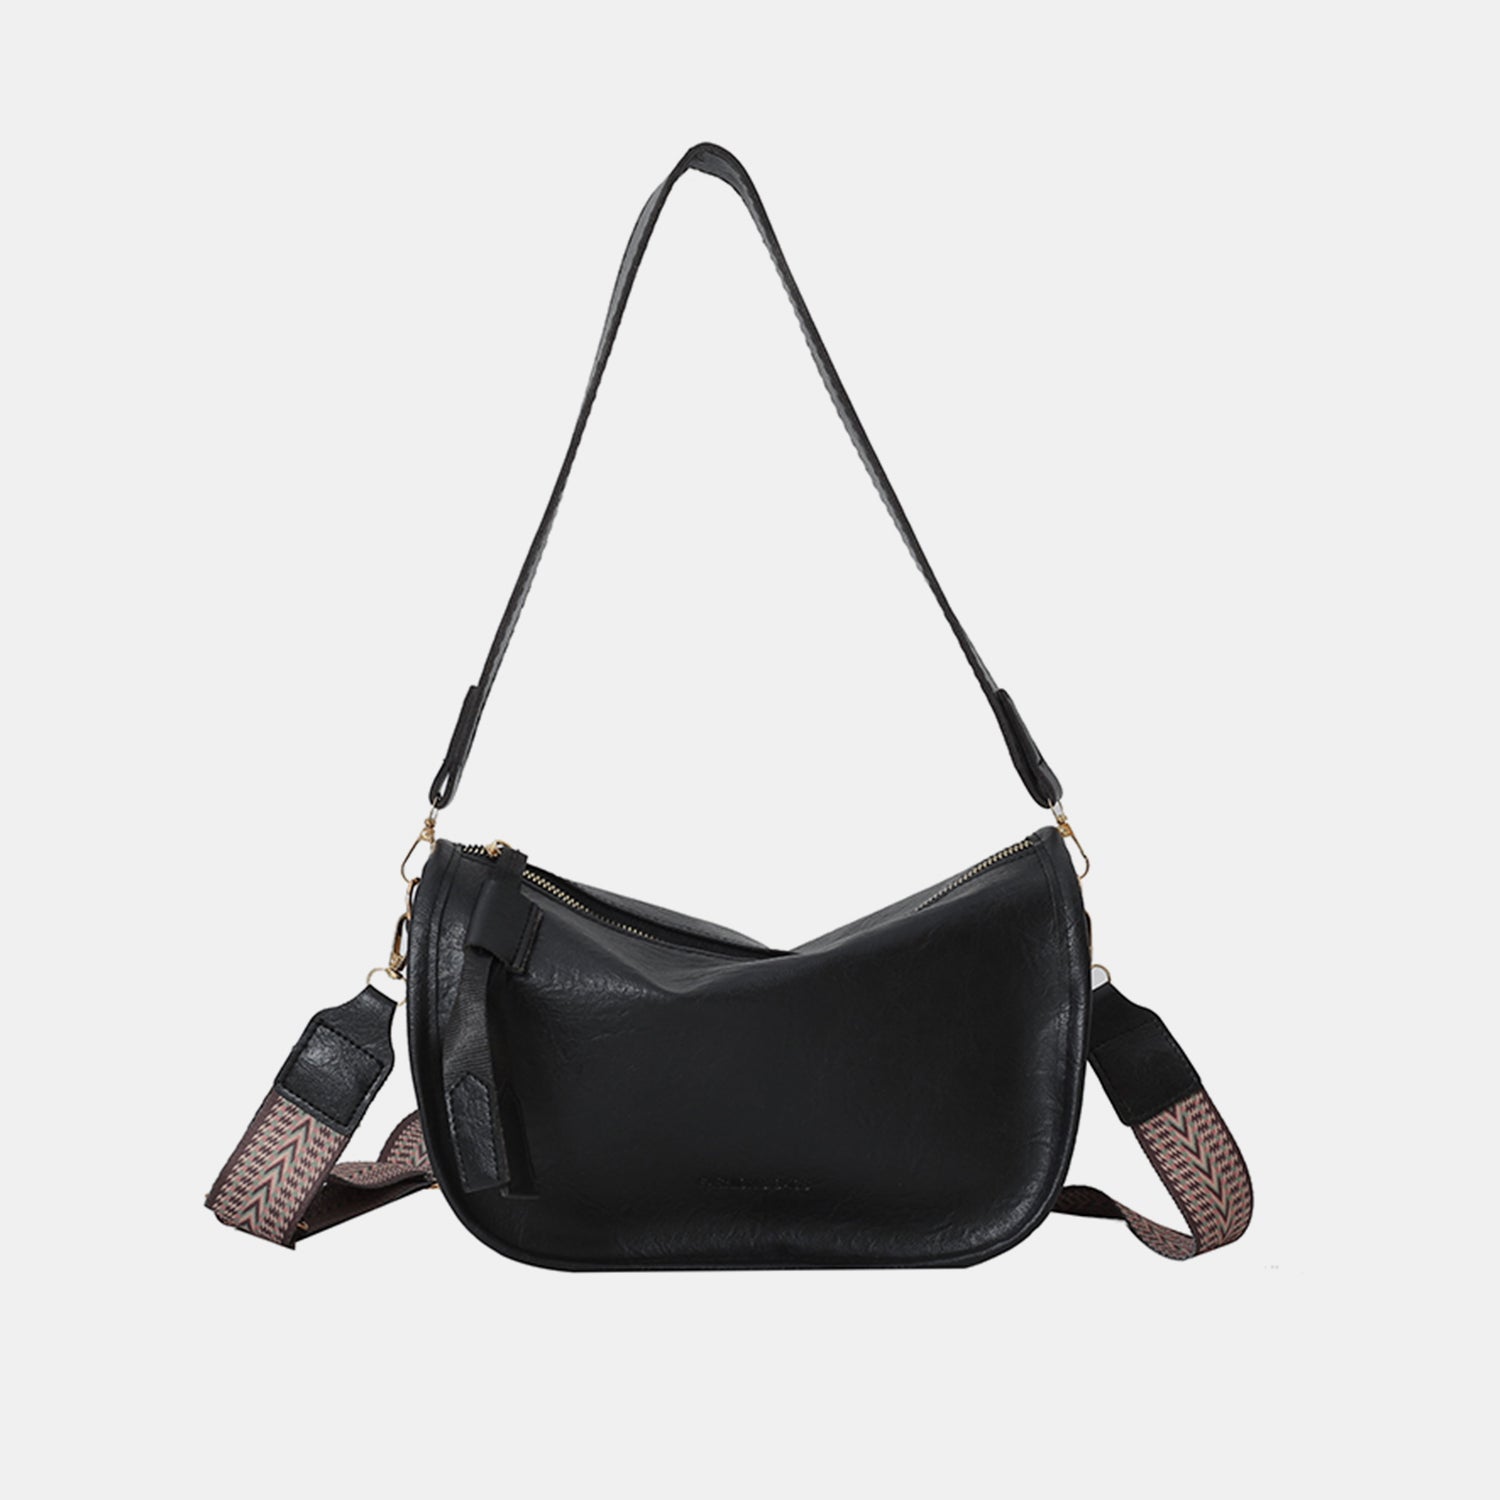 PU Leather Double Strap Shoulder Bag Black One Size